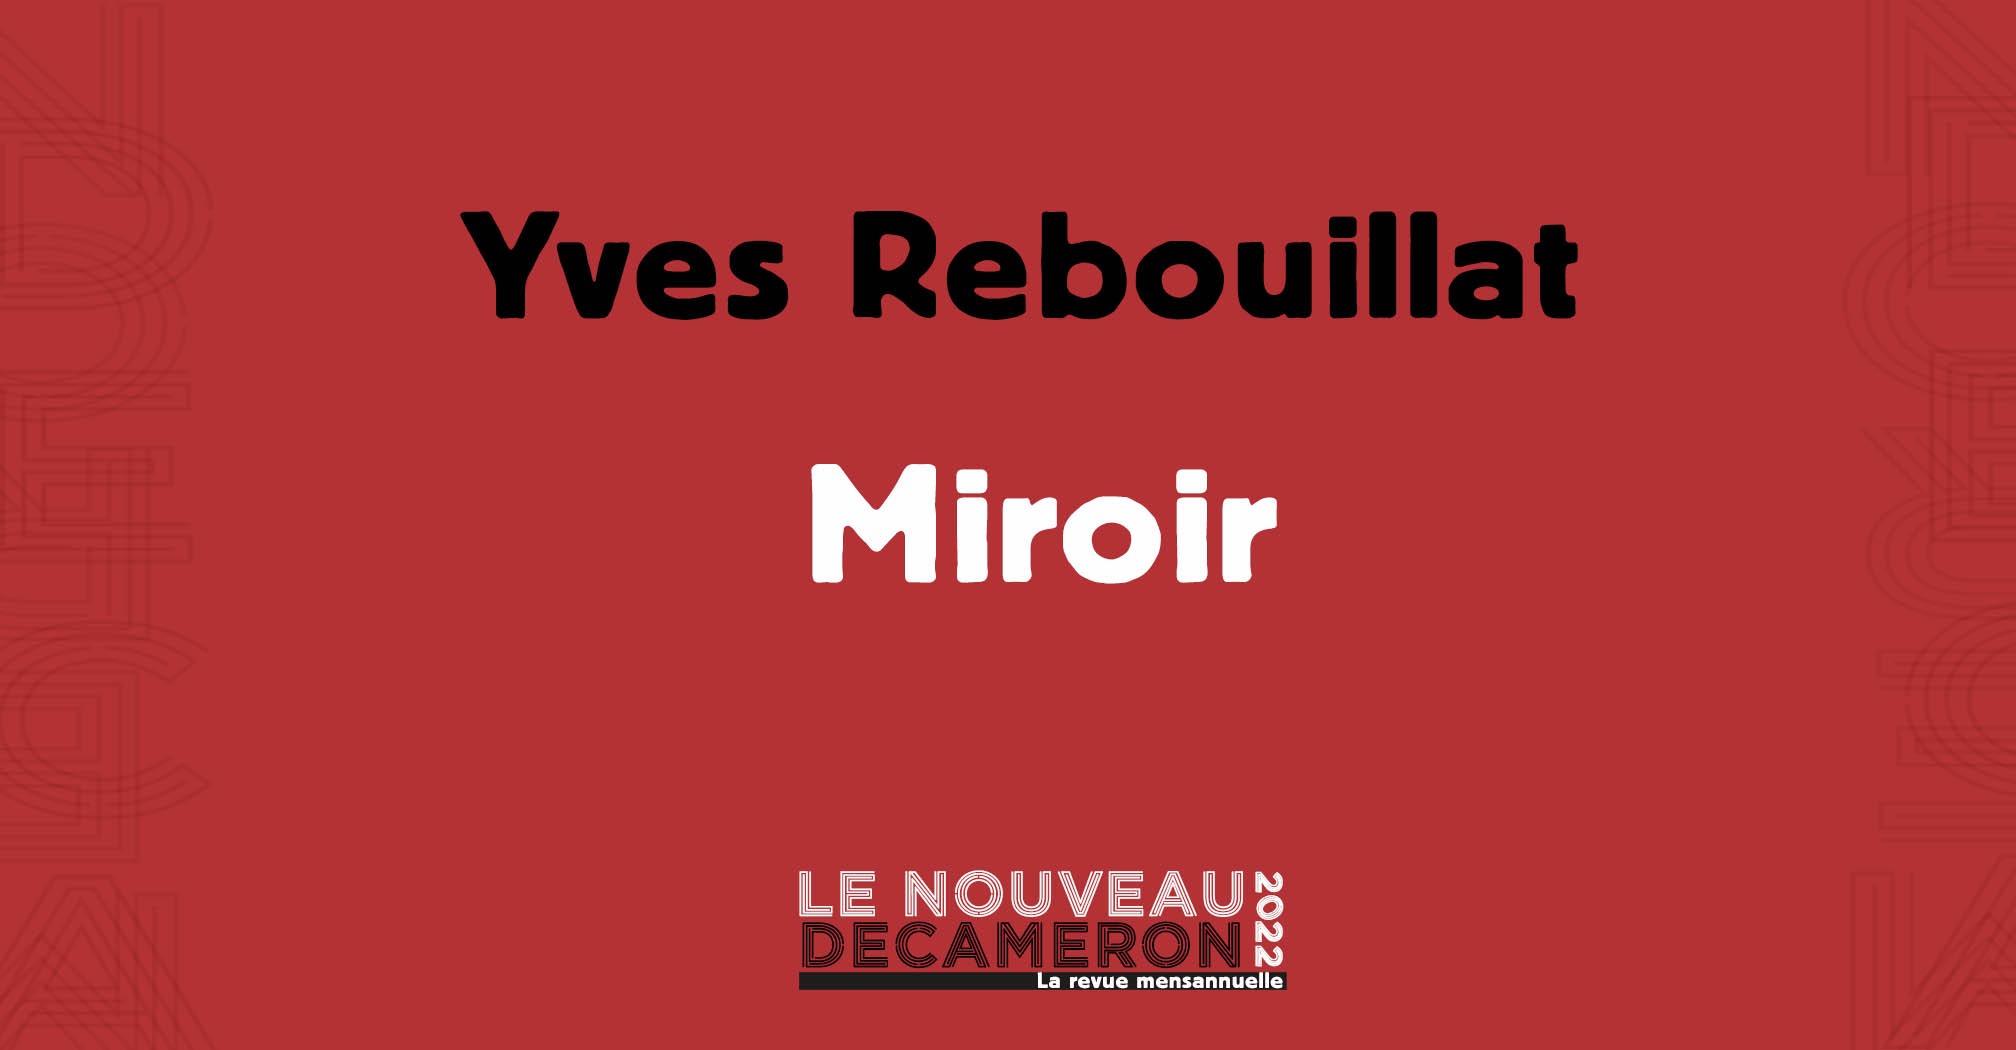 Yves Rebouillat - Miroir